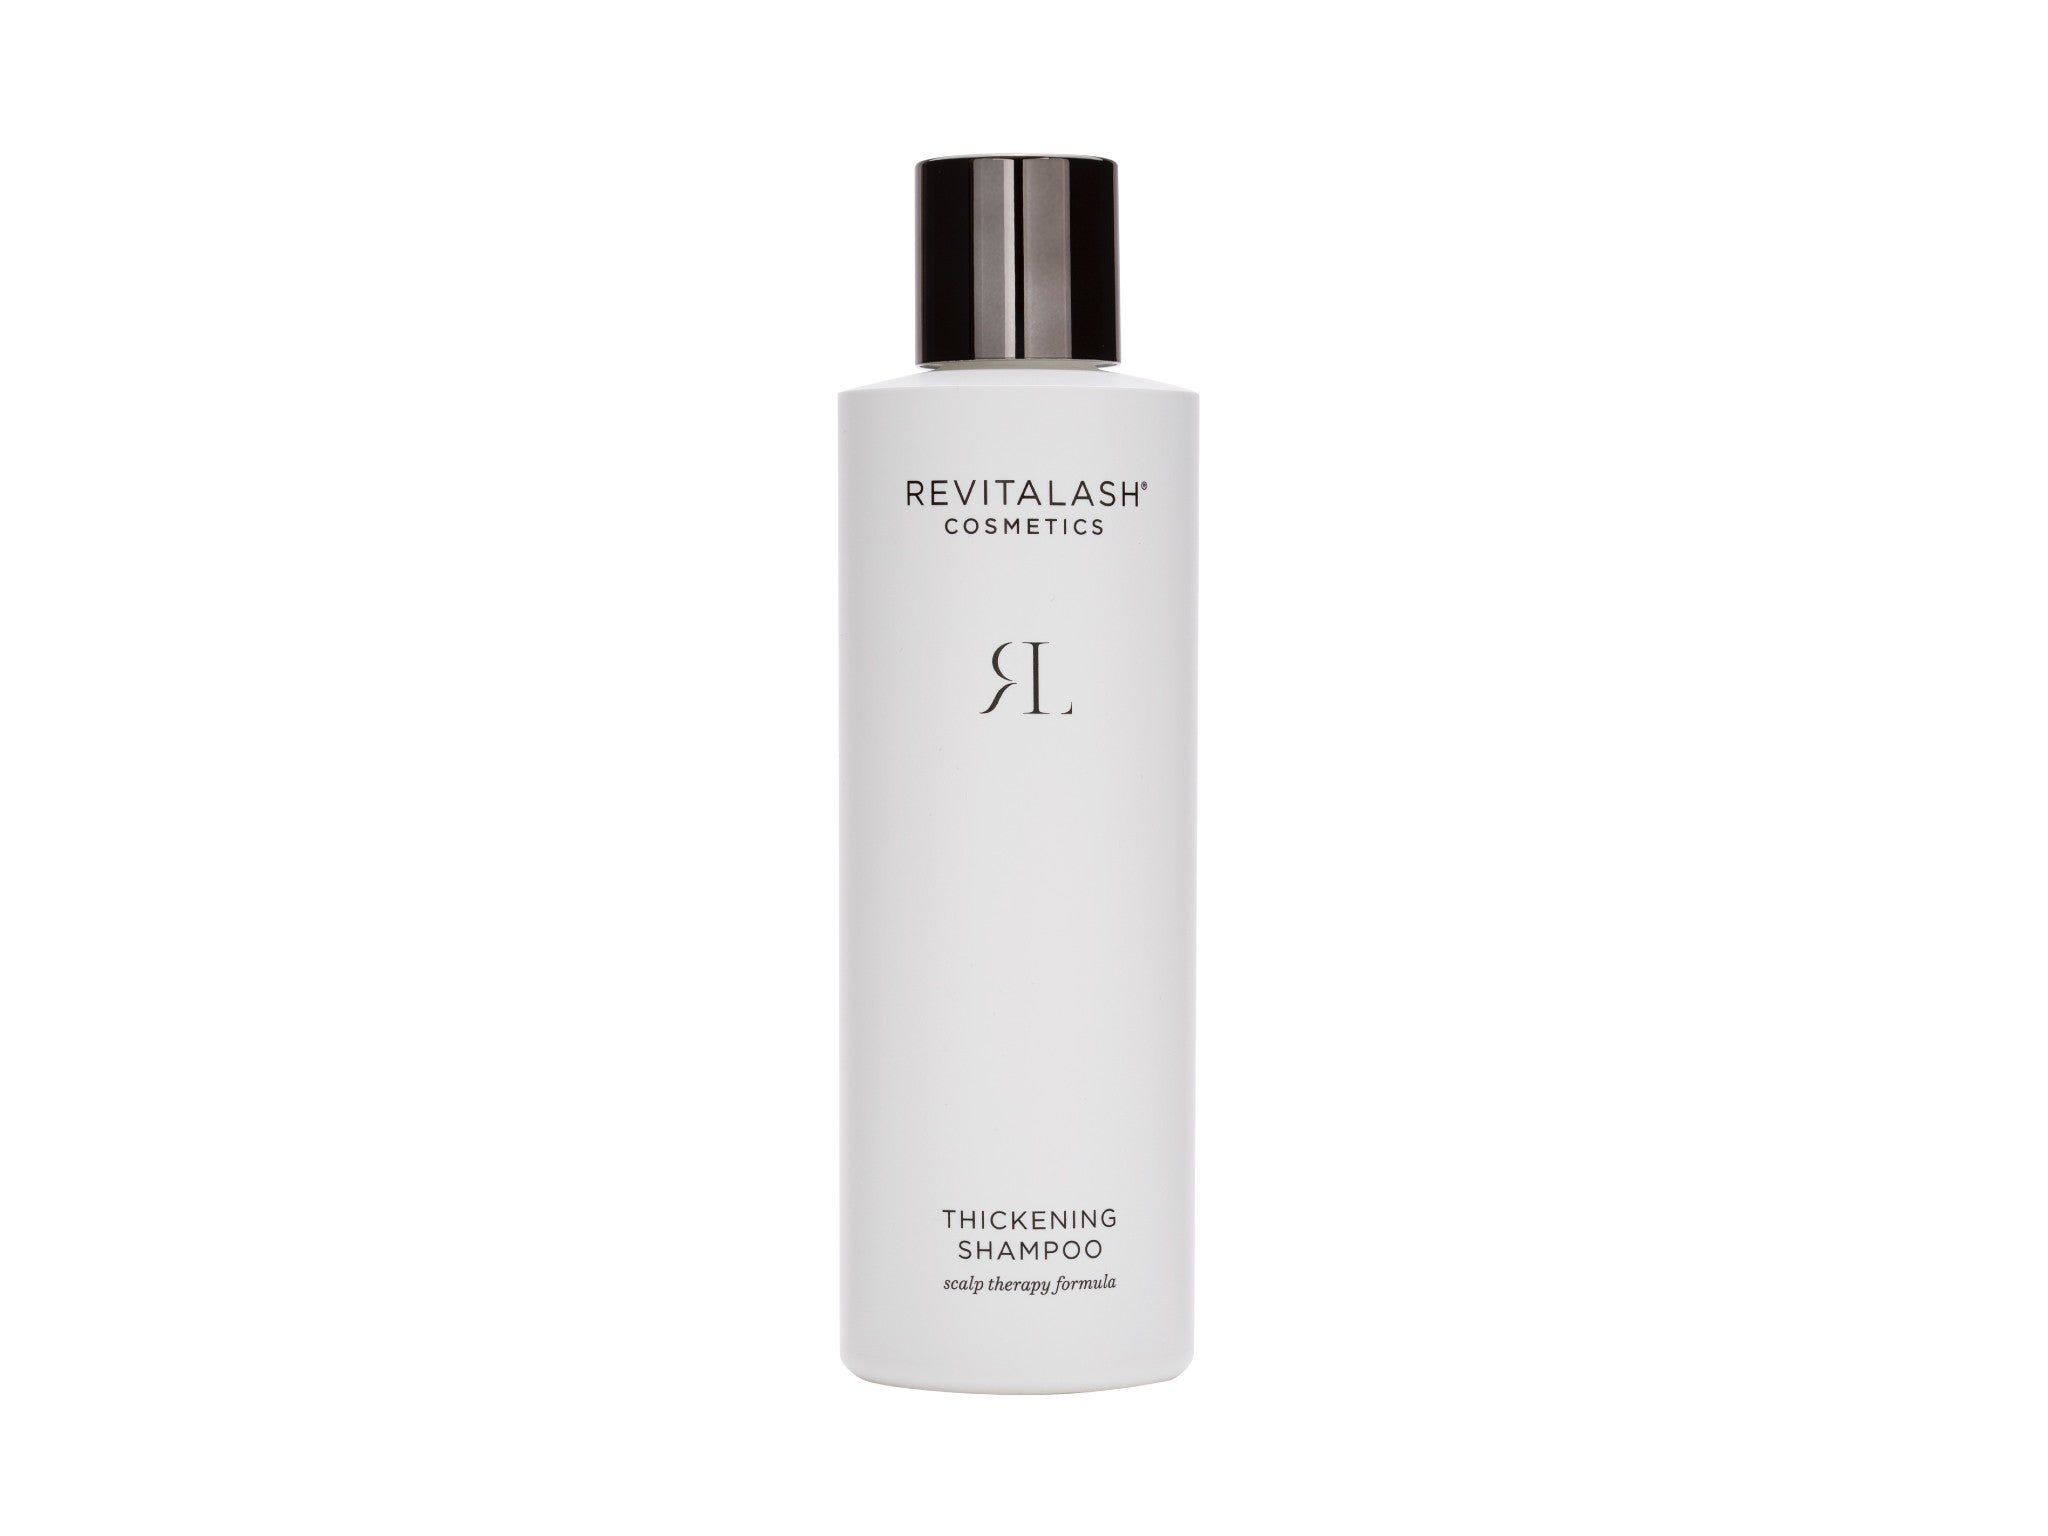 Revitalash Cosmetics thickening shampoo, 251ml indybest.jpg